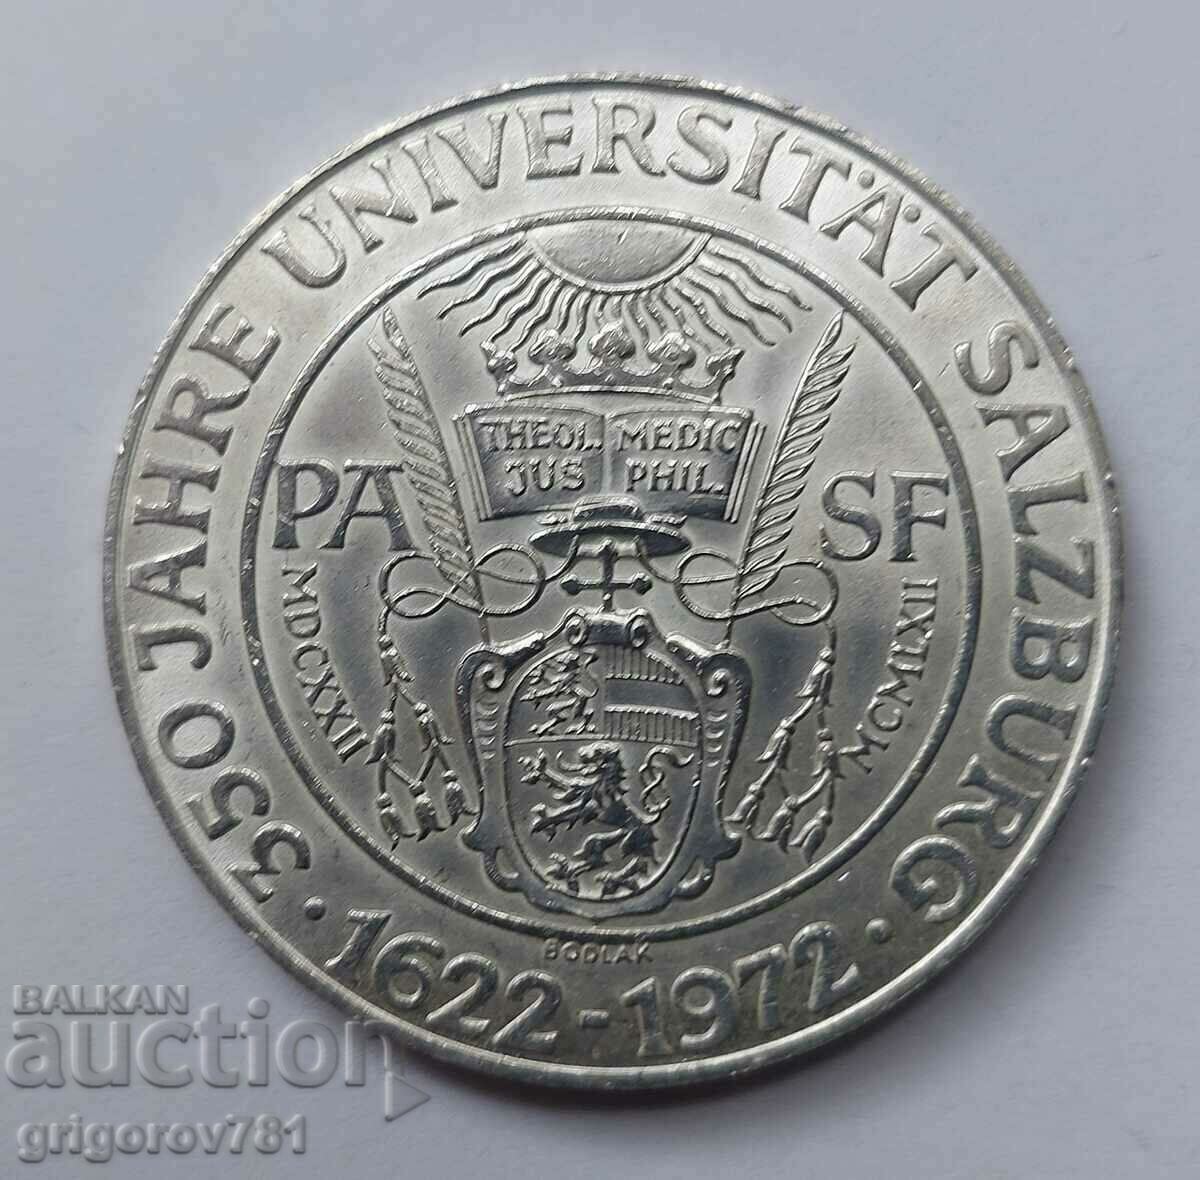 50 Shilling Silver Austria 1972 - Silver Coin #4